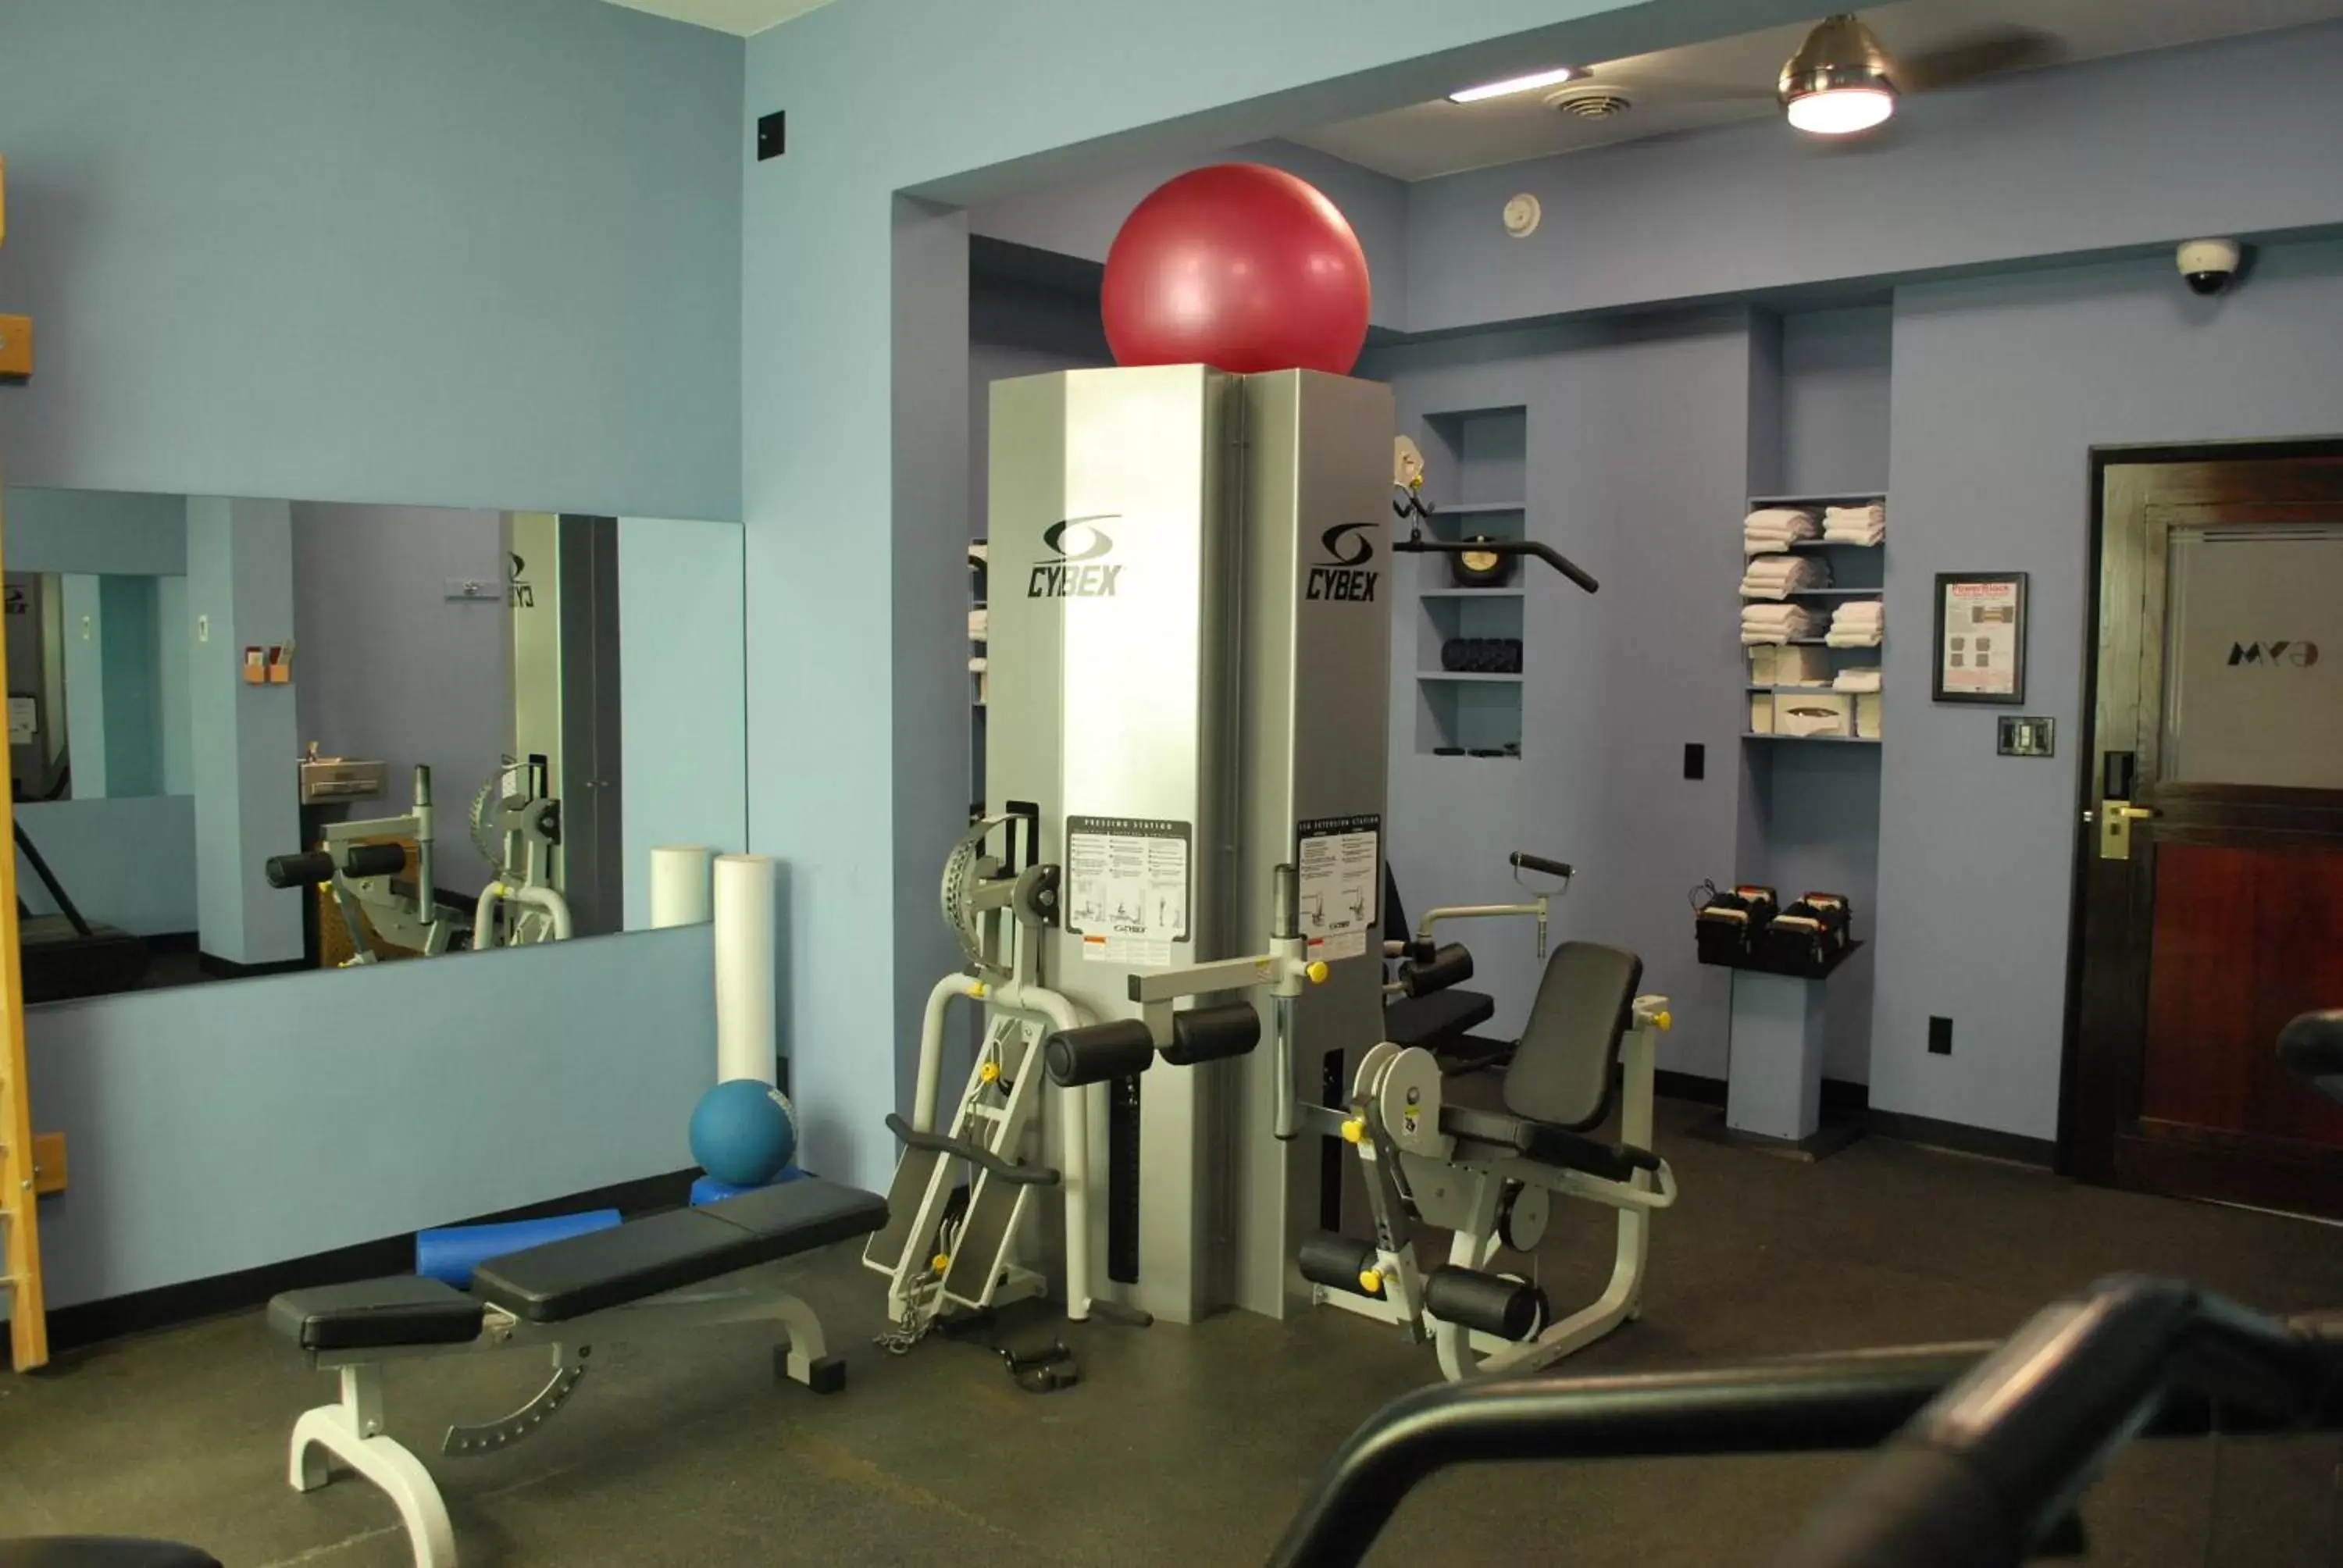 Fitness centre/facilities, Fitness Center/Facilities in Washington Square Hotel